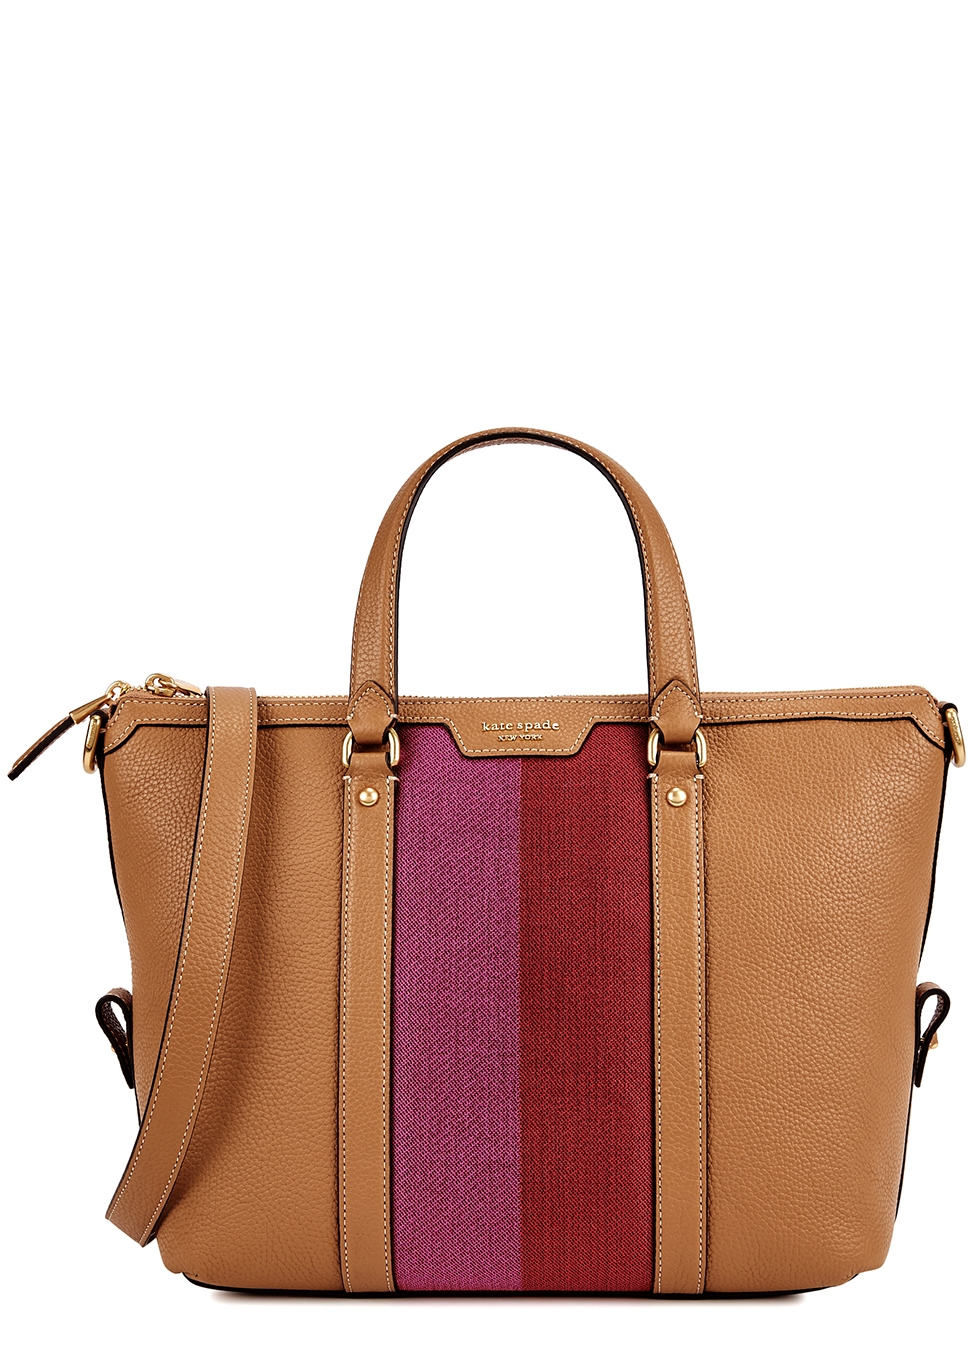 Kate Spade New York Brown medium leather top handle bag - Harvey Nichols